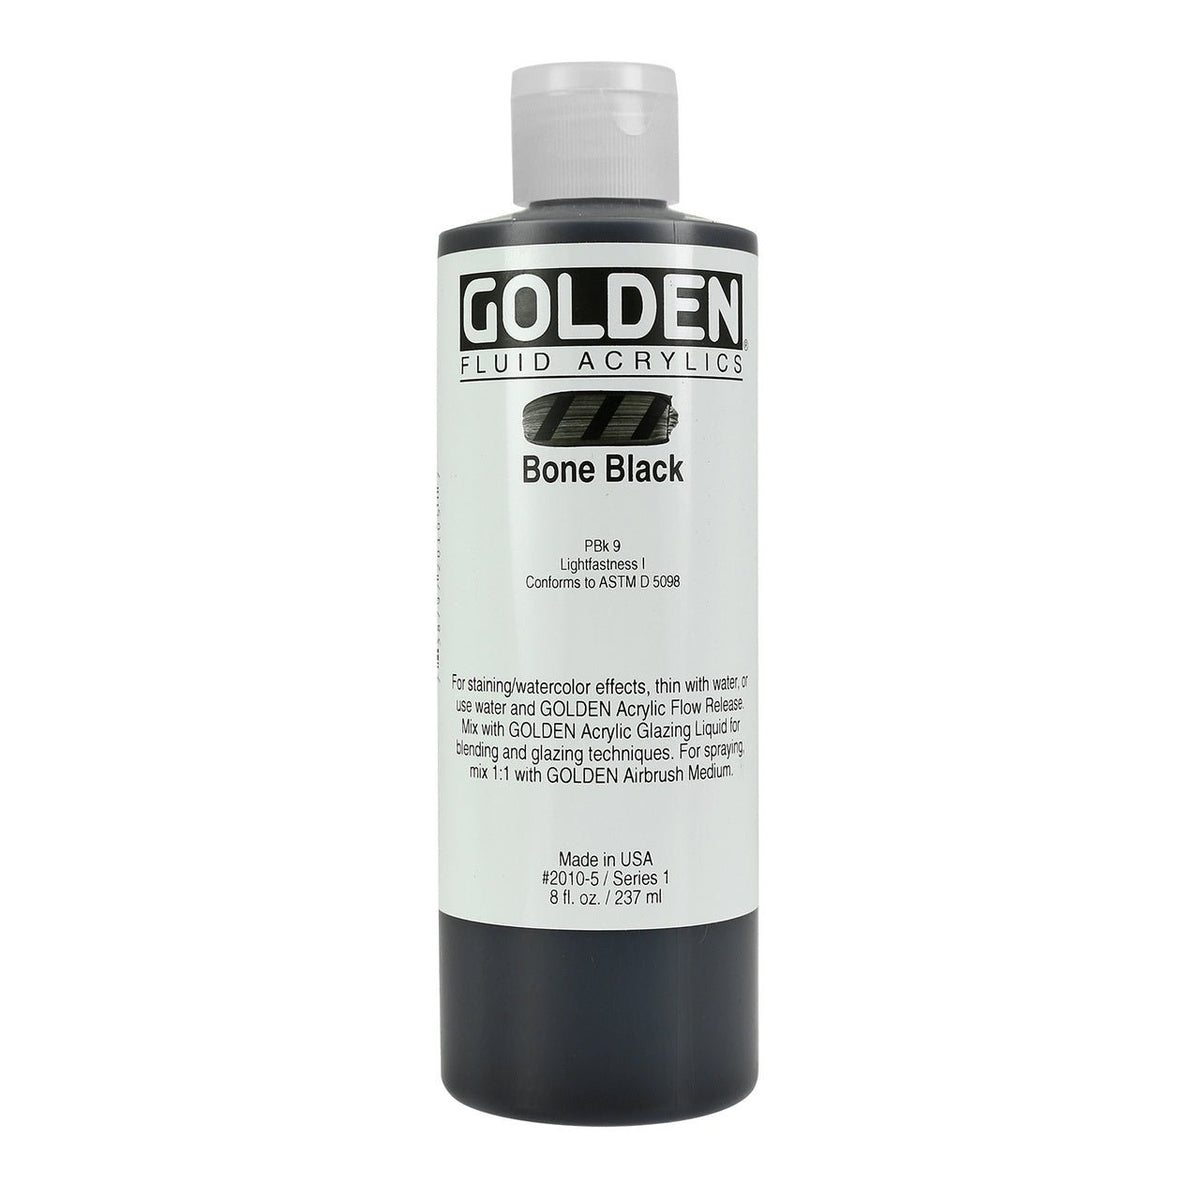 Golden Fluid Acrylic Bone Black 8 oz - merriartist.com